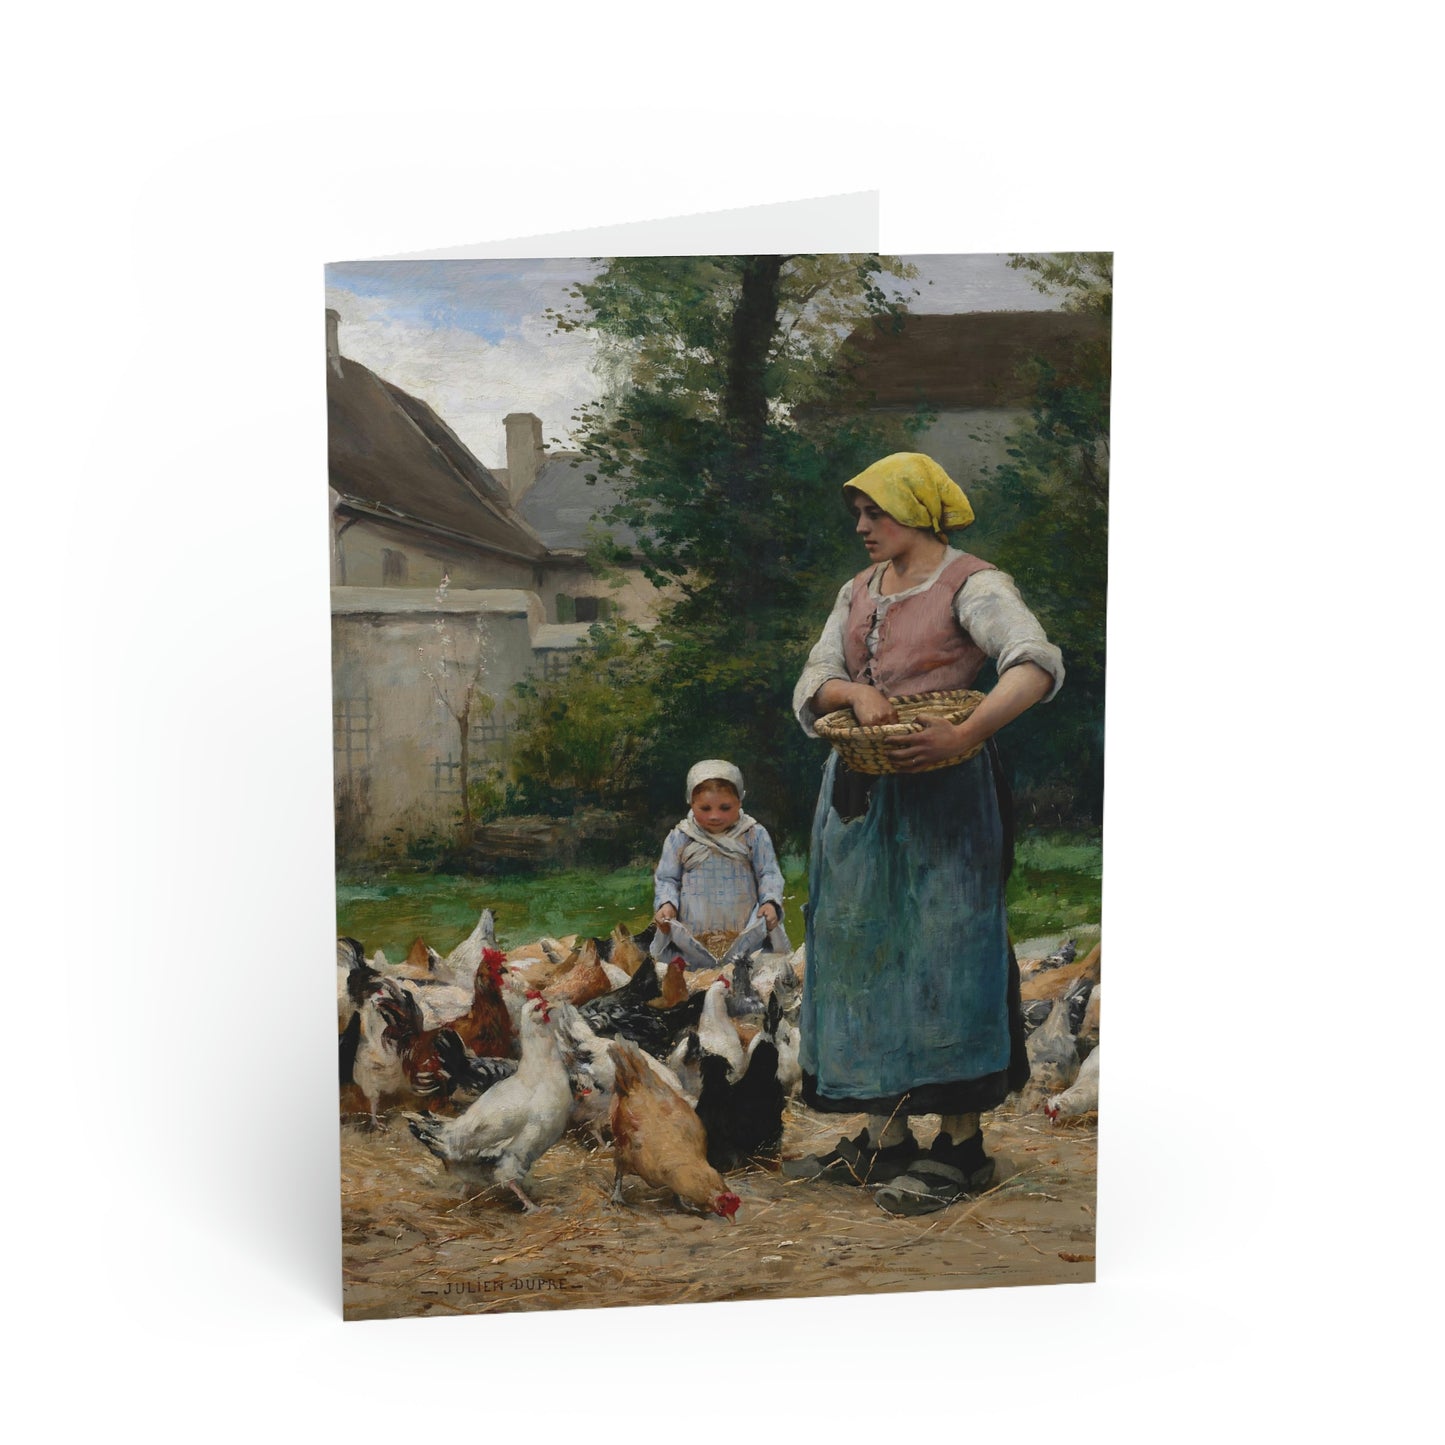 Julien Dupre: "Femme avec des poules" - Folded Greeting Cards